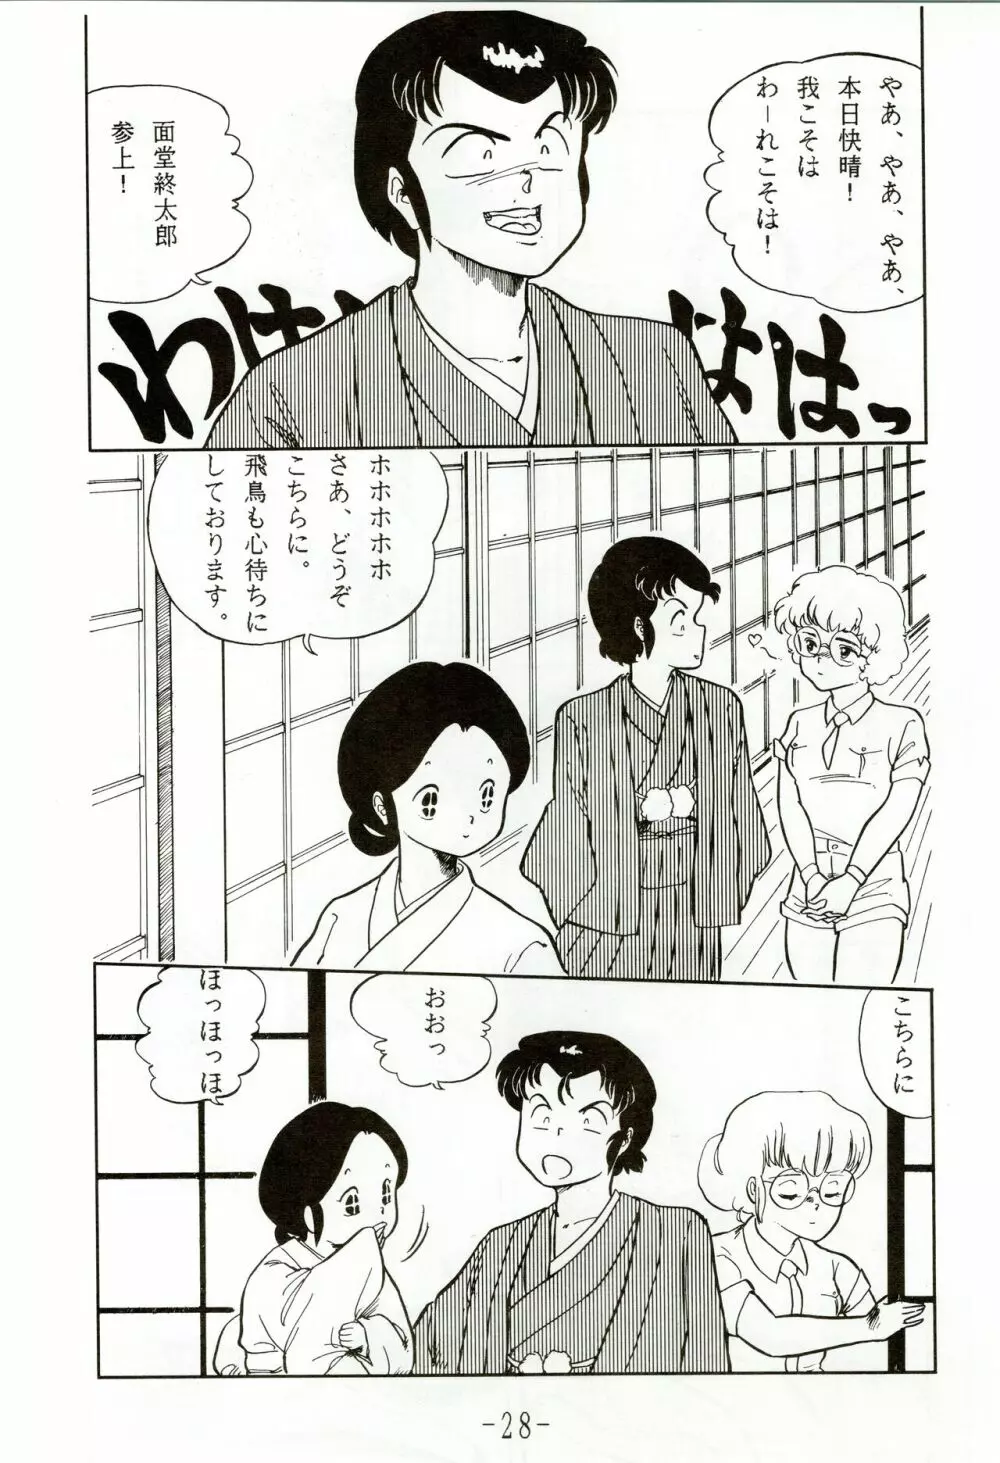 甲冑伝説 - page28